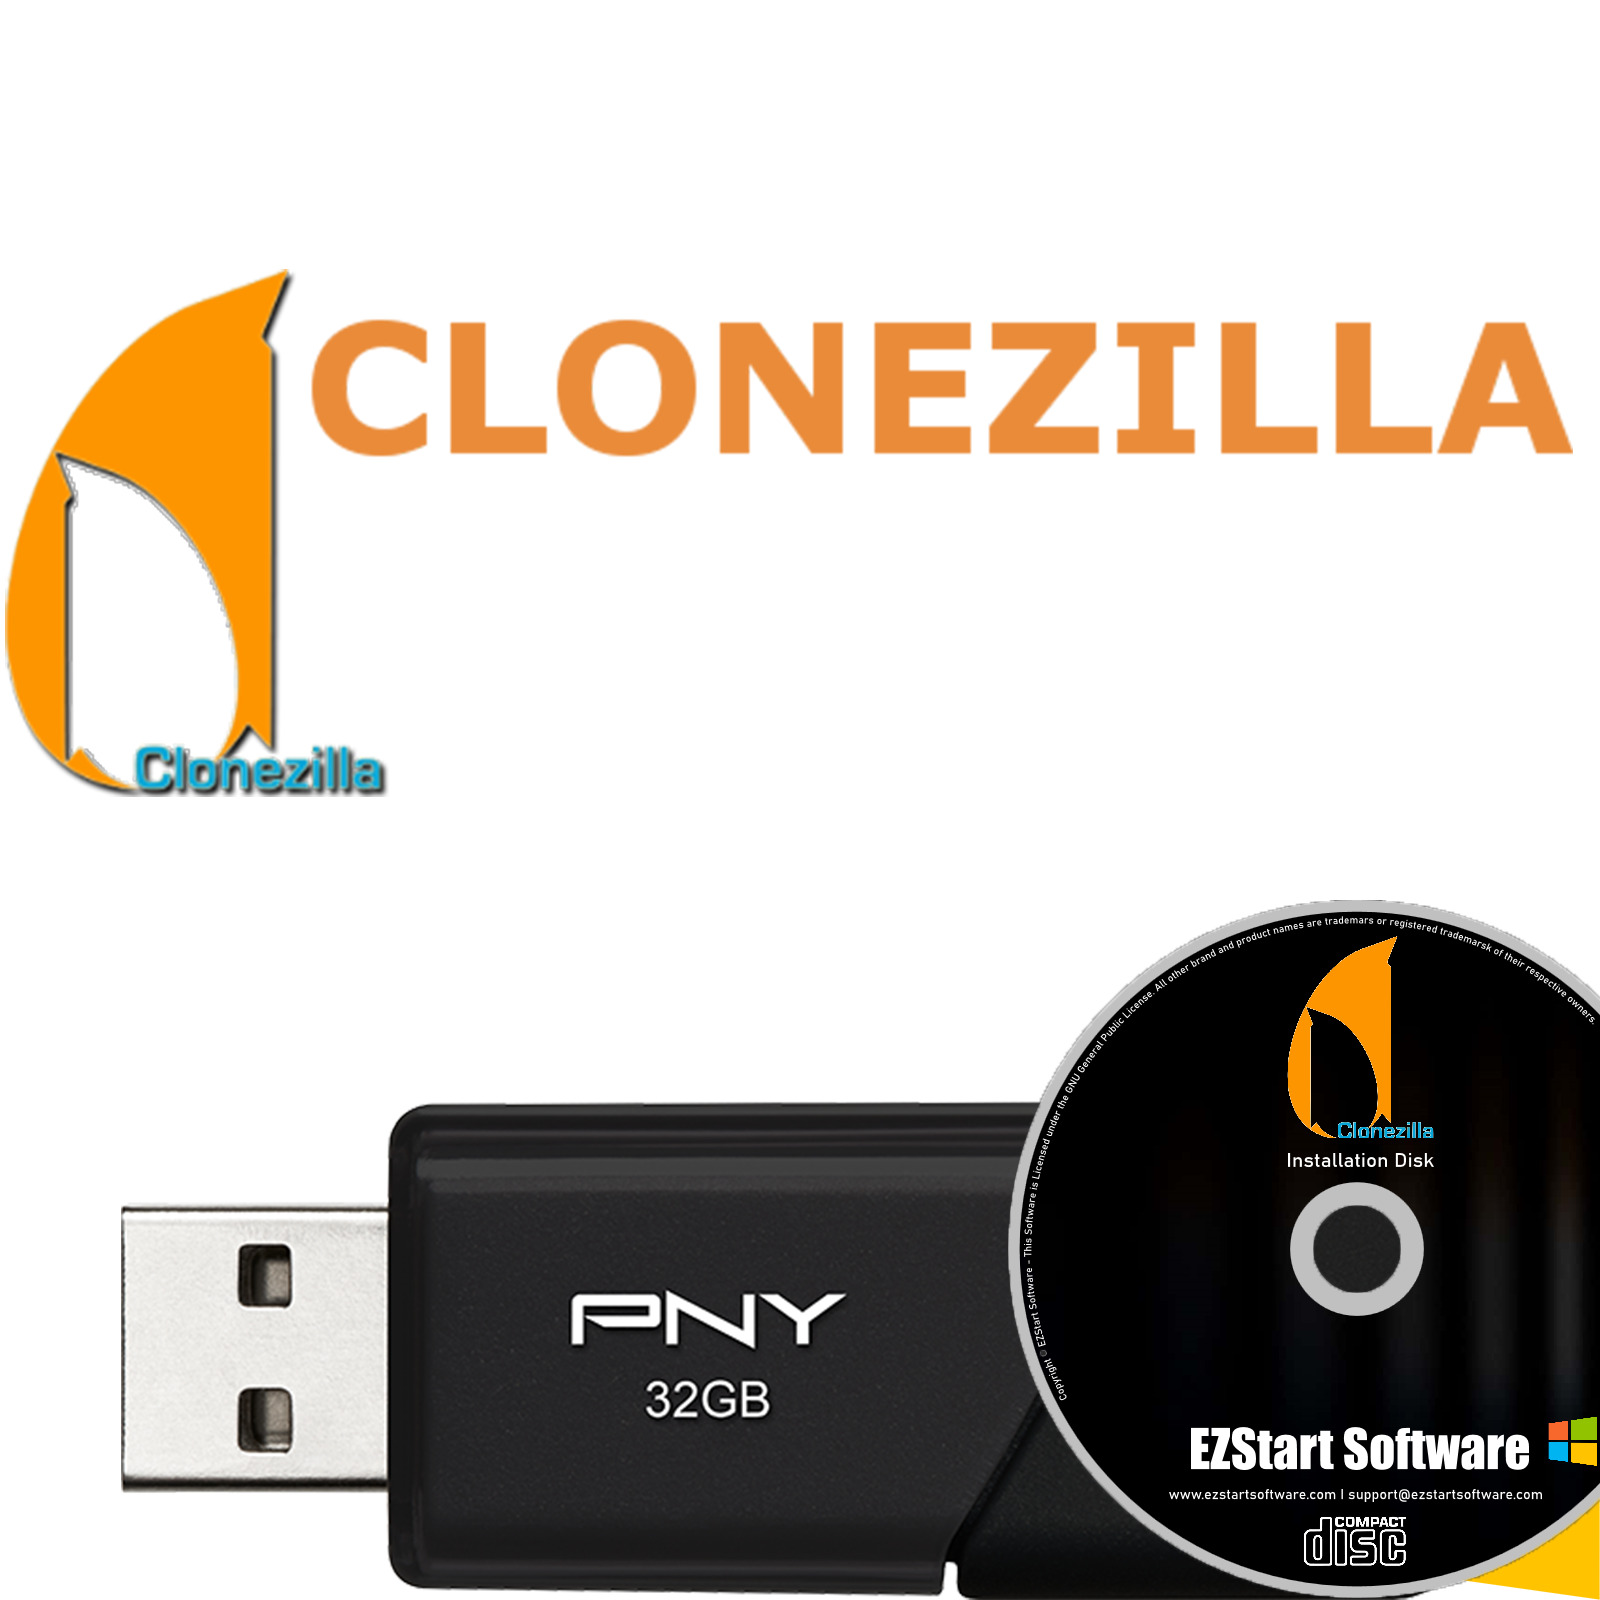 Clonezilla A Partition & Disk Imaging/Cloning Program on CD/USB